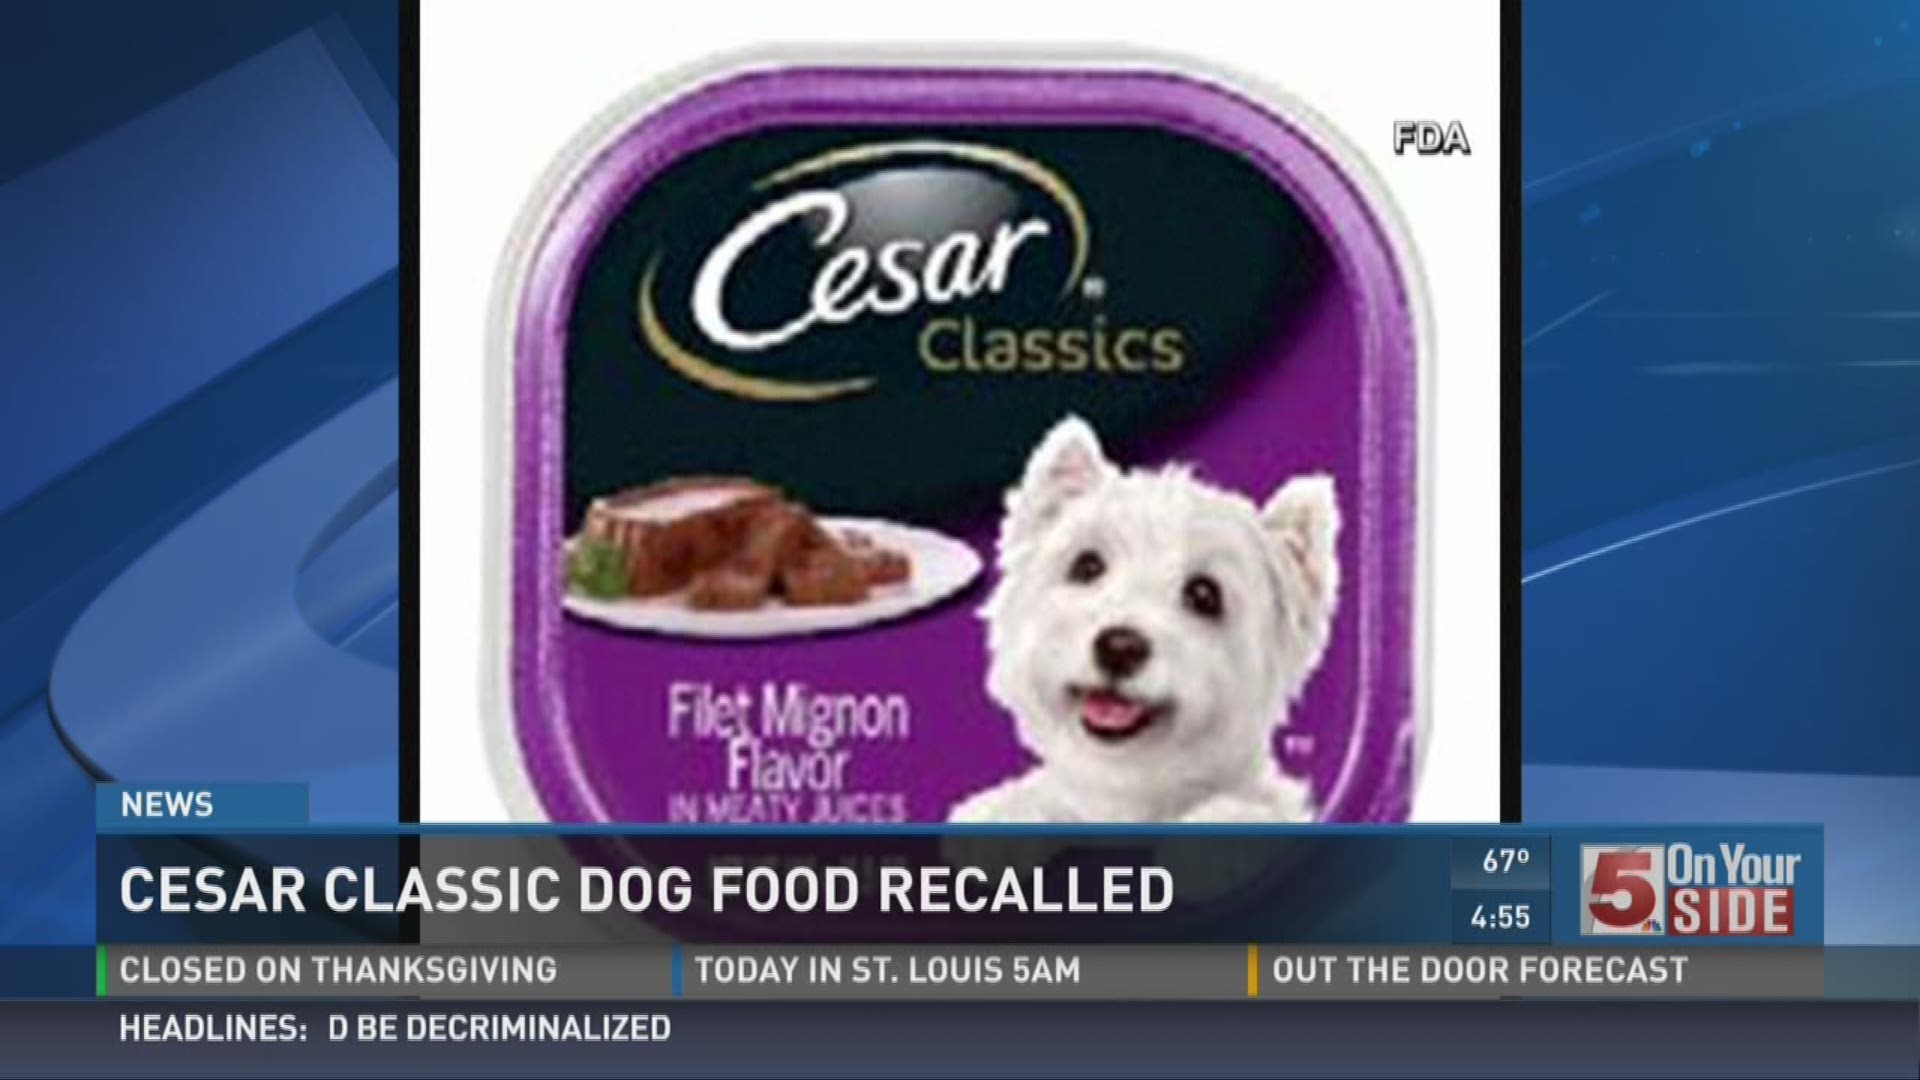 Cesar Classics dog food recalled for choking hazard